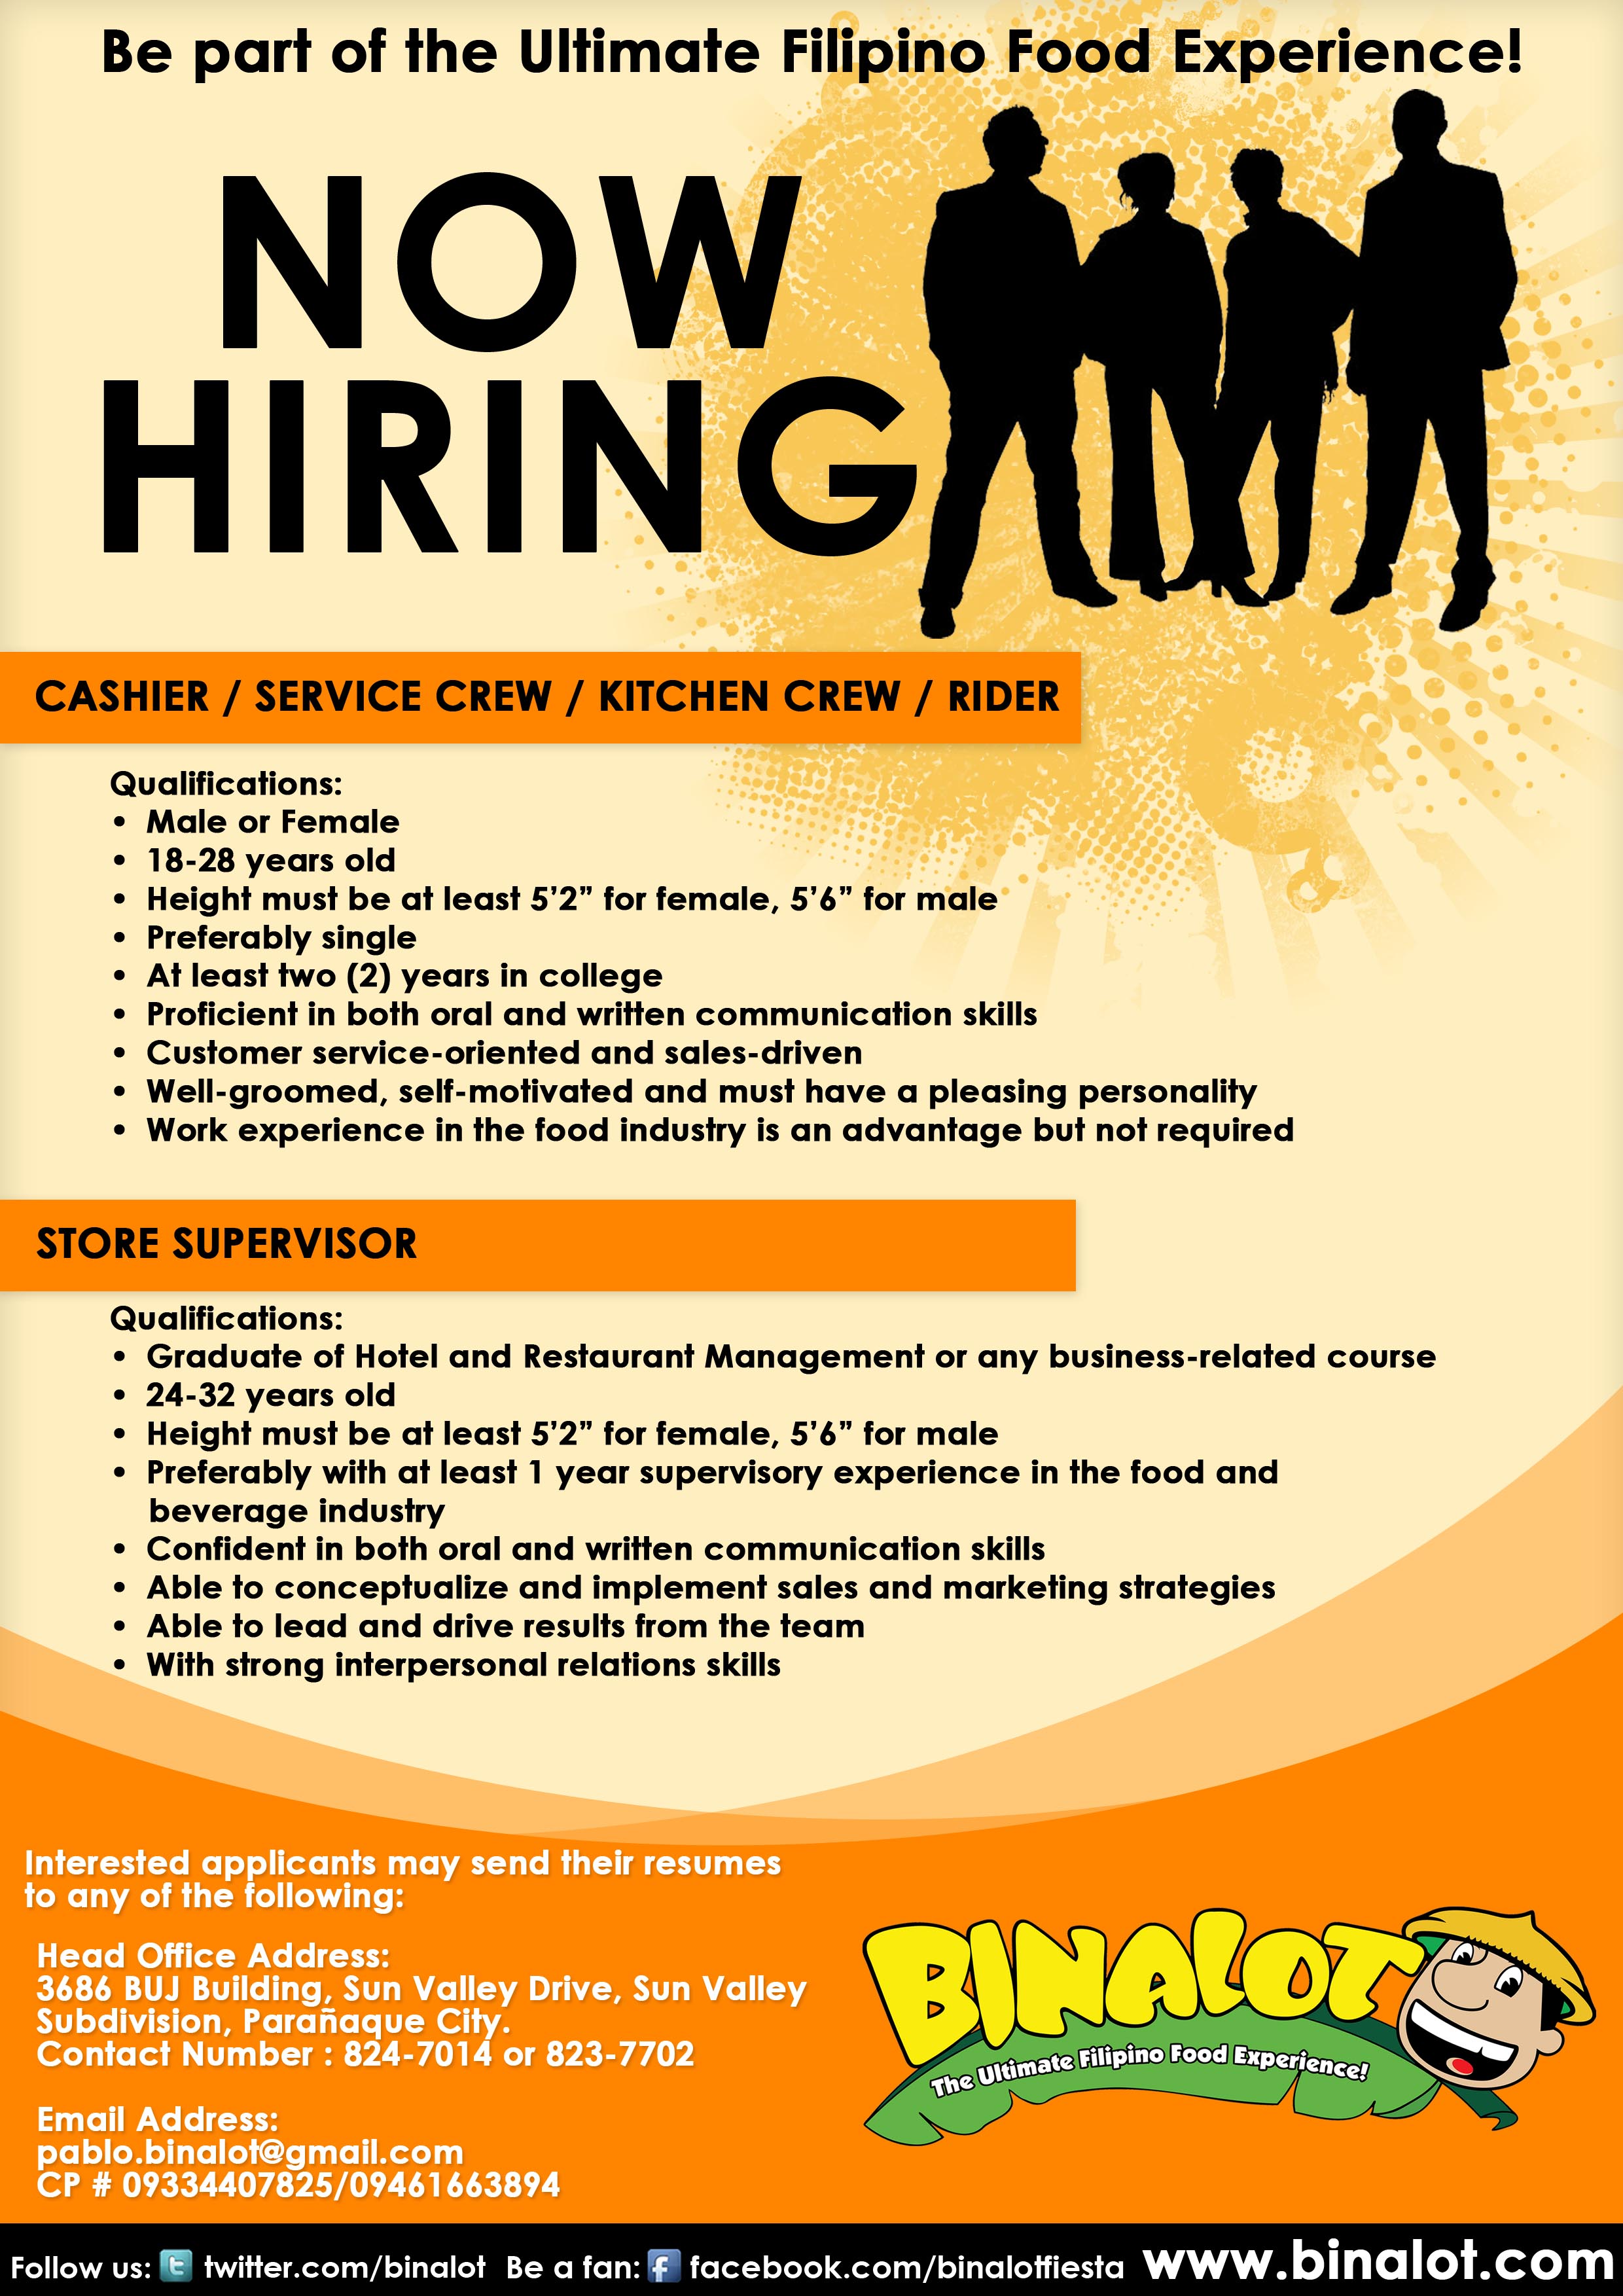 Job hiring in batangas area 2013